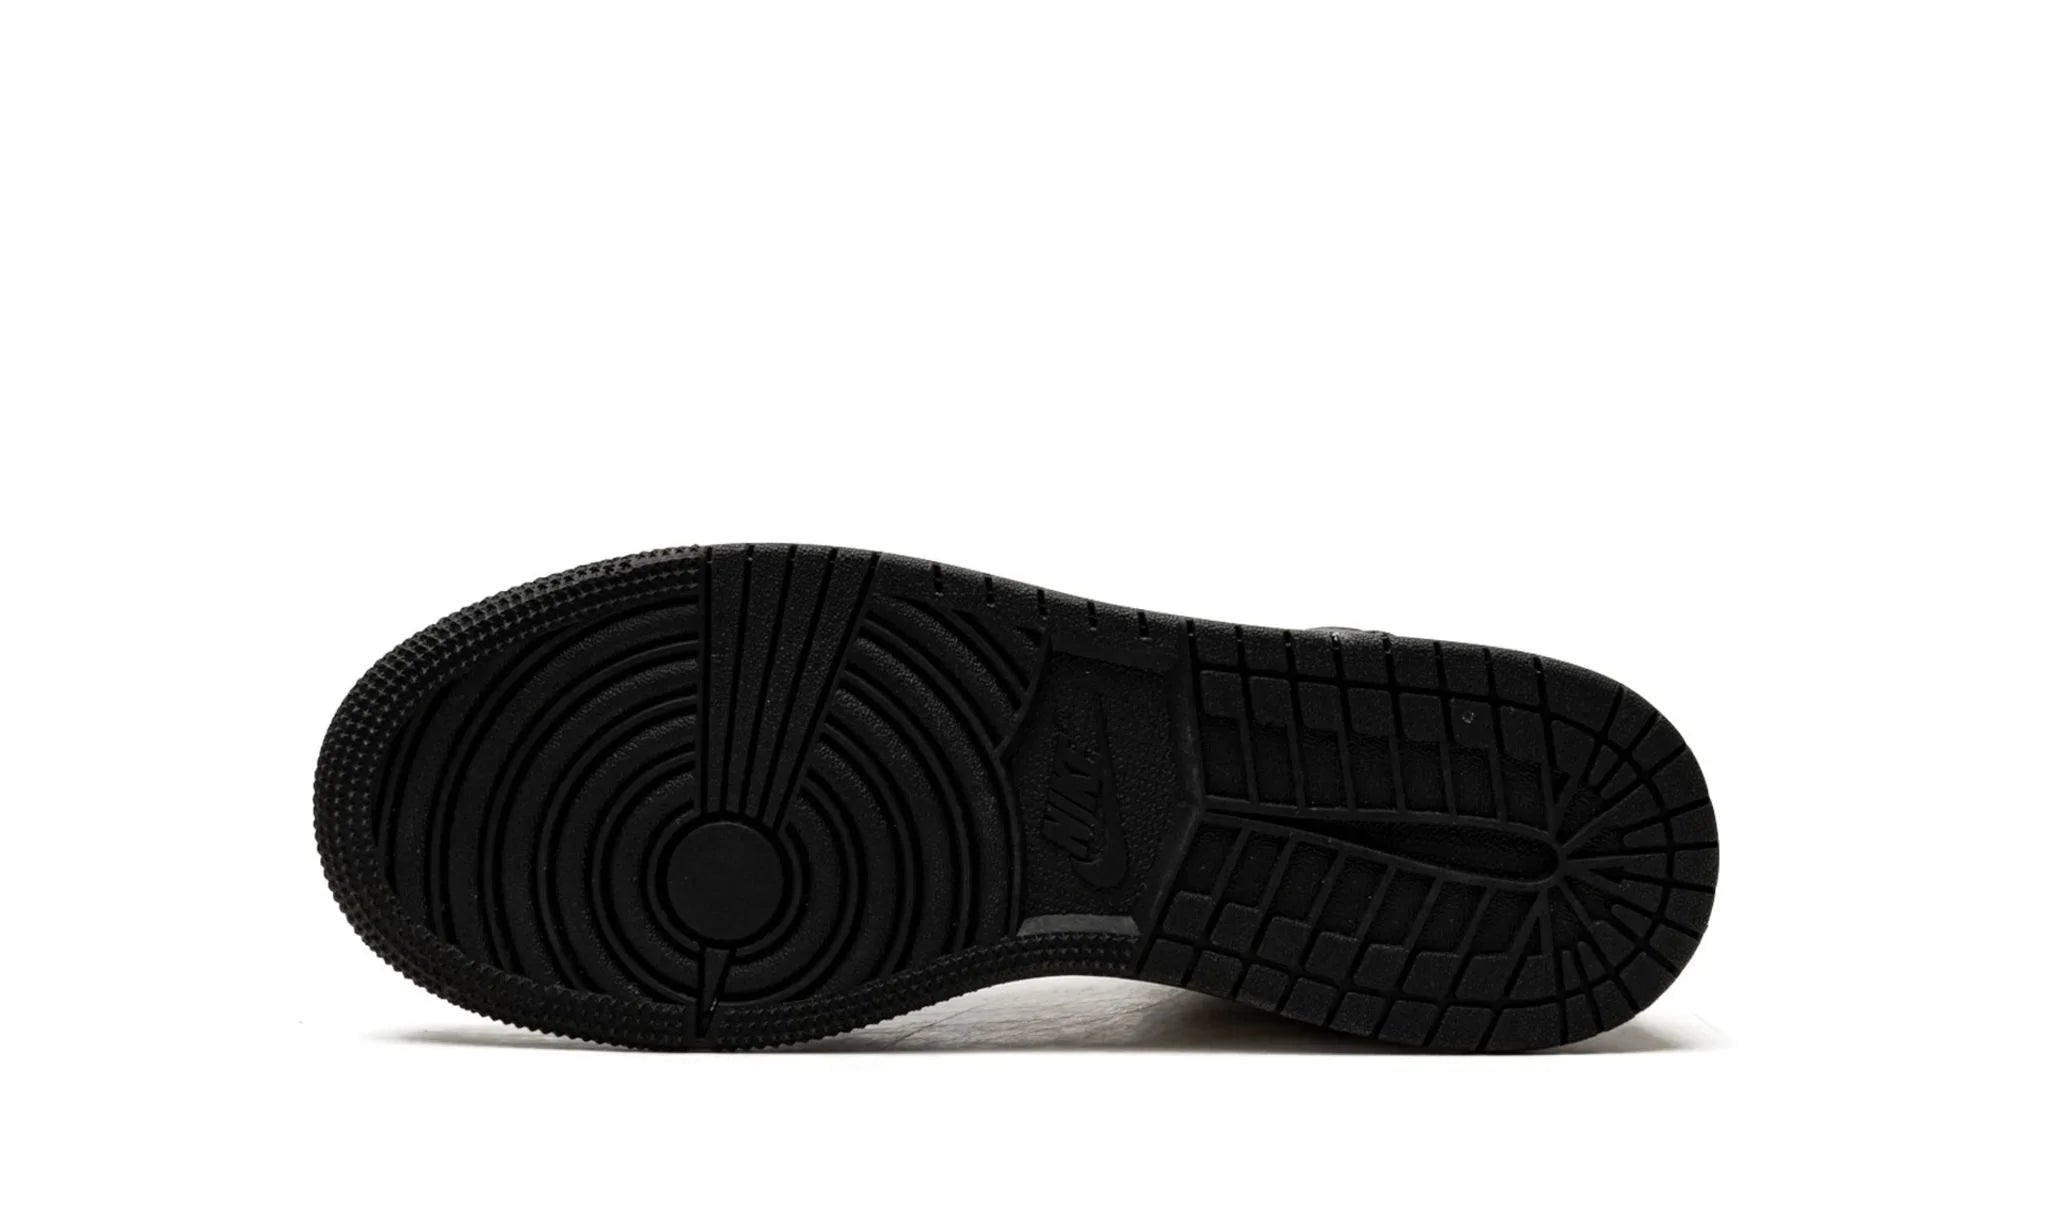 Jordan 1 Mid "White Pollen Black" - 554725-177 - Sneakers